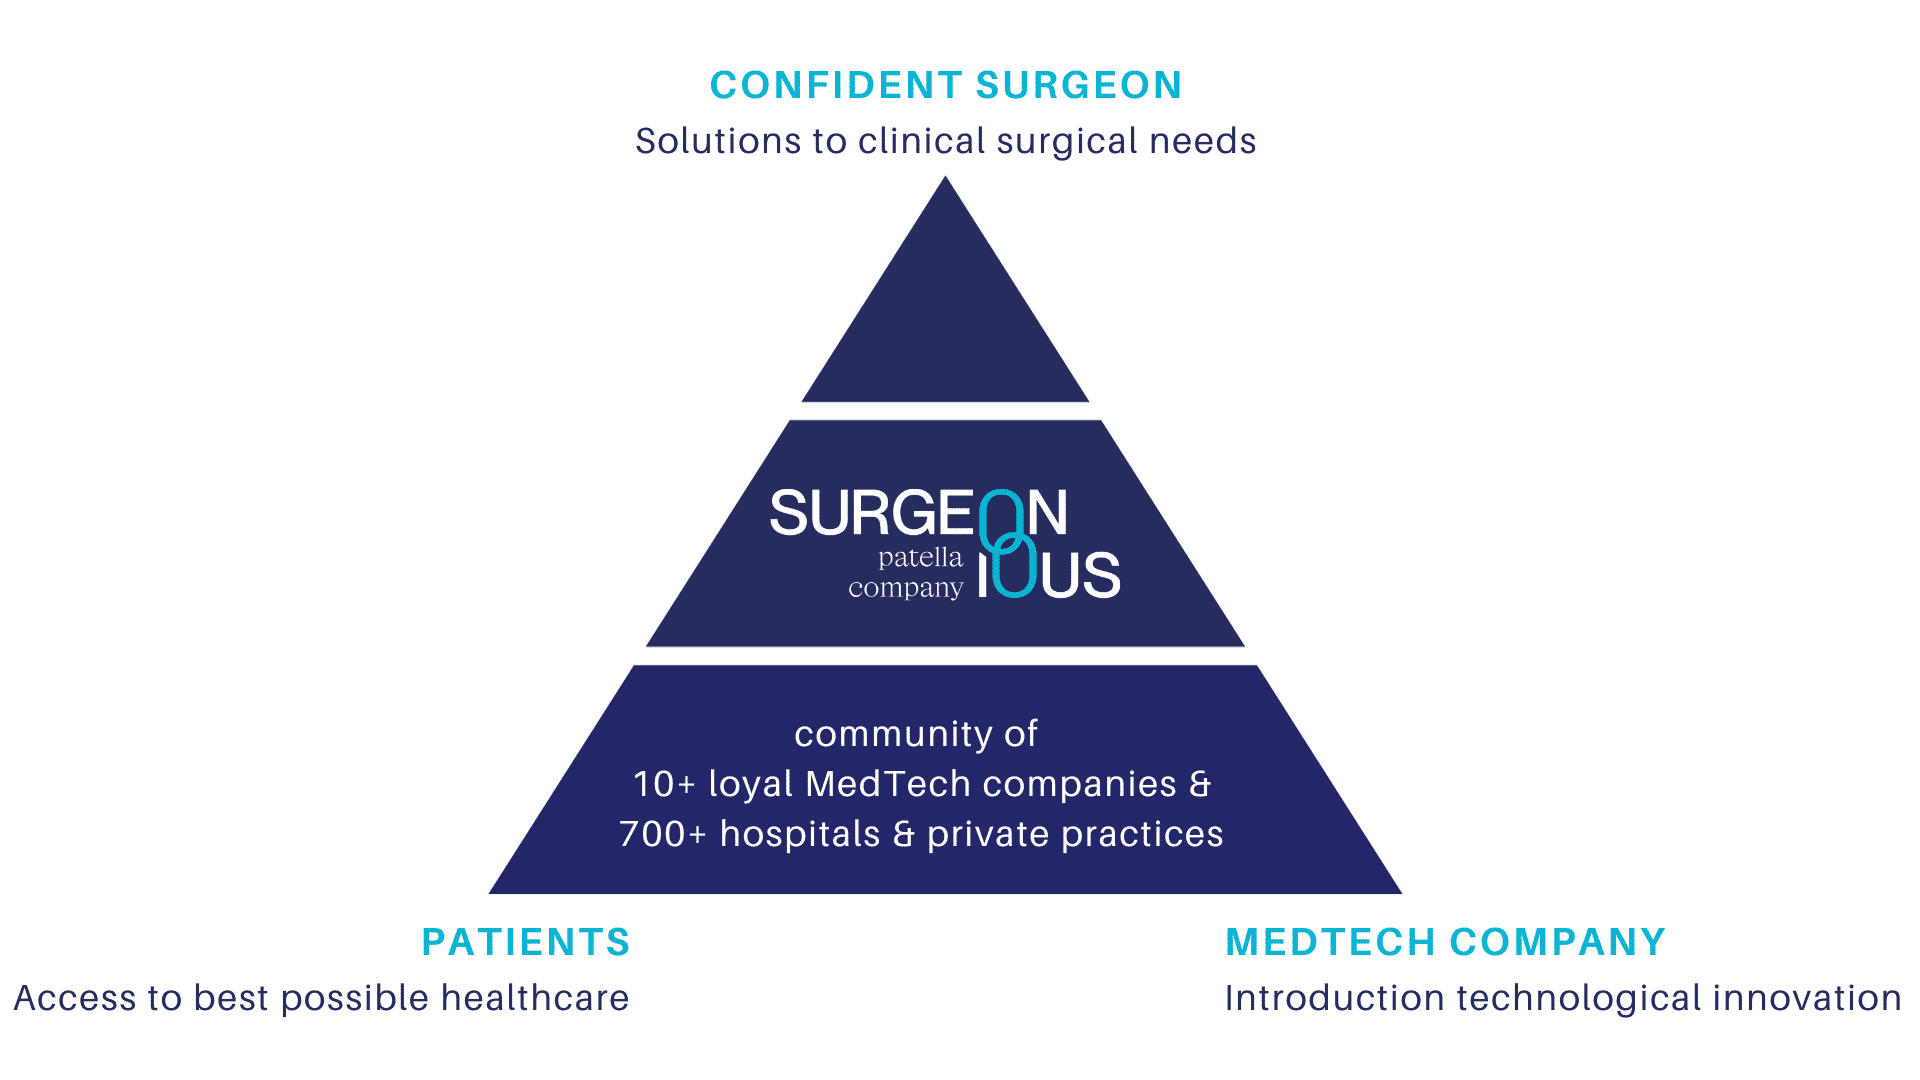 the Surgeonious company culture